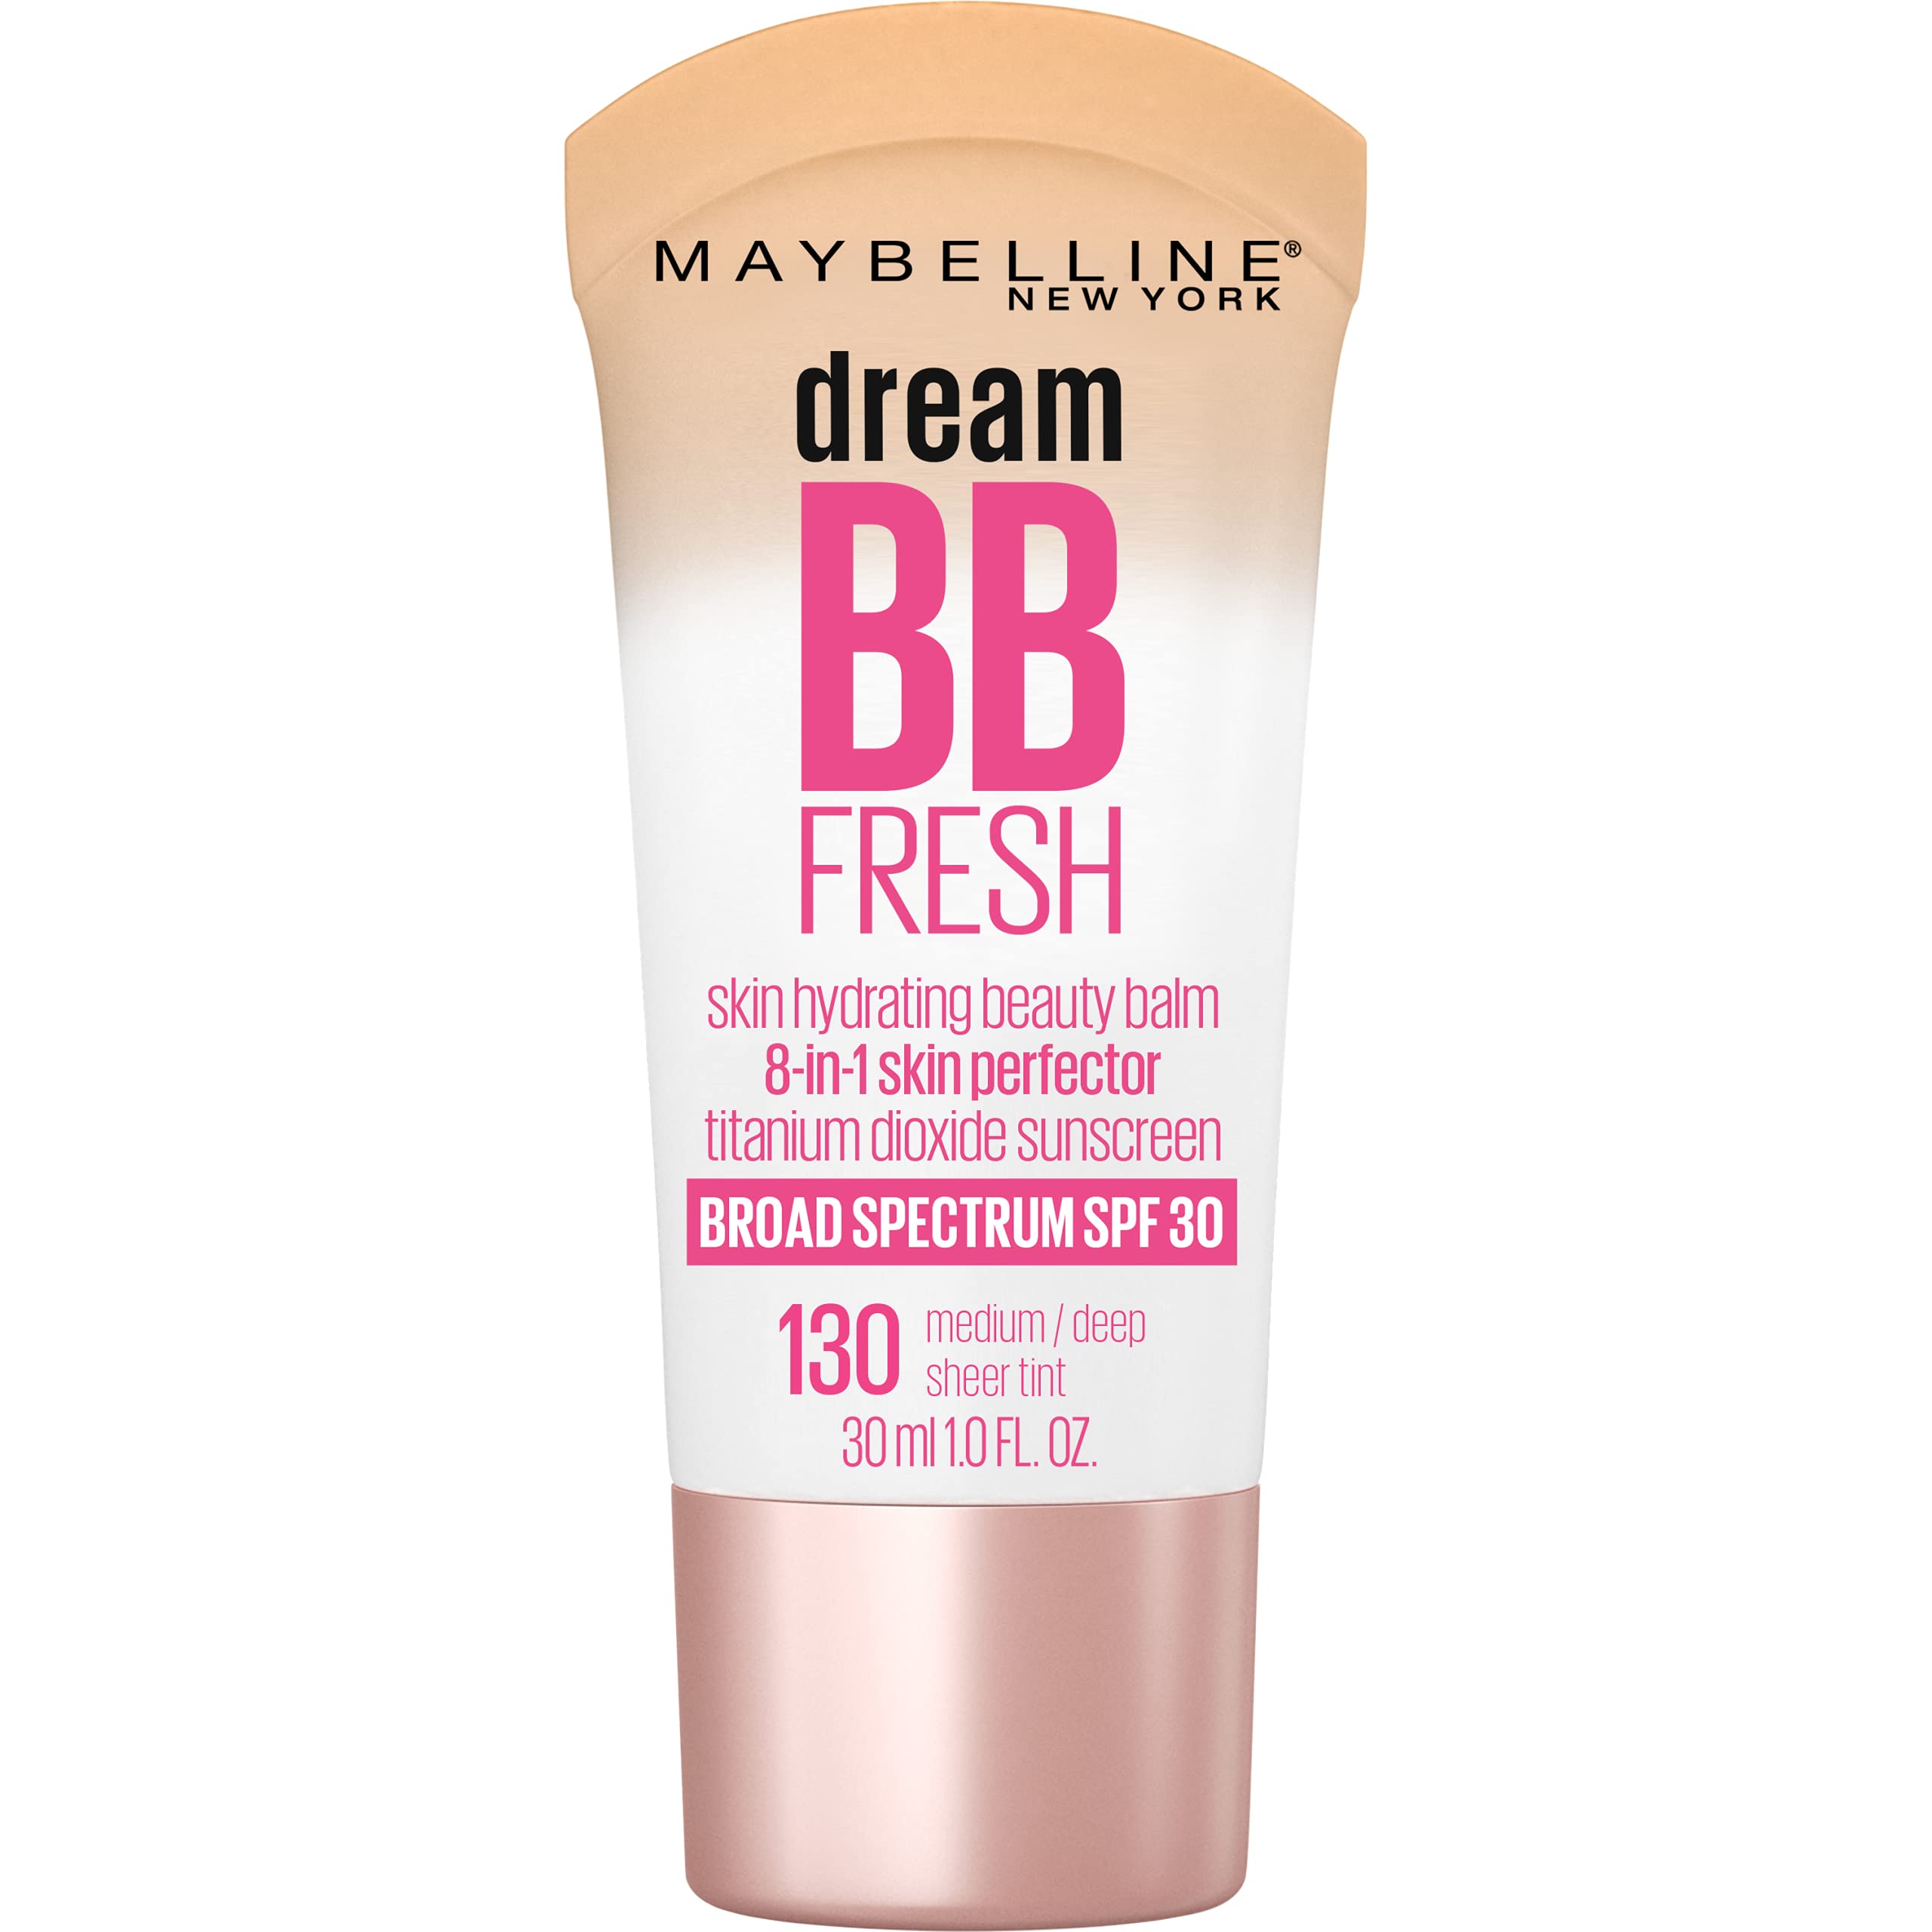 MAYBELLINE New York Dream Fresh Skin Hydrating BB cream, 8-in-1 Skin Perfecting Beauty Balm with Broad Spectrum SPF 30, Sheer Tint Coverage, Oil-Free, Medium/Deep, 1 Fl Oz